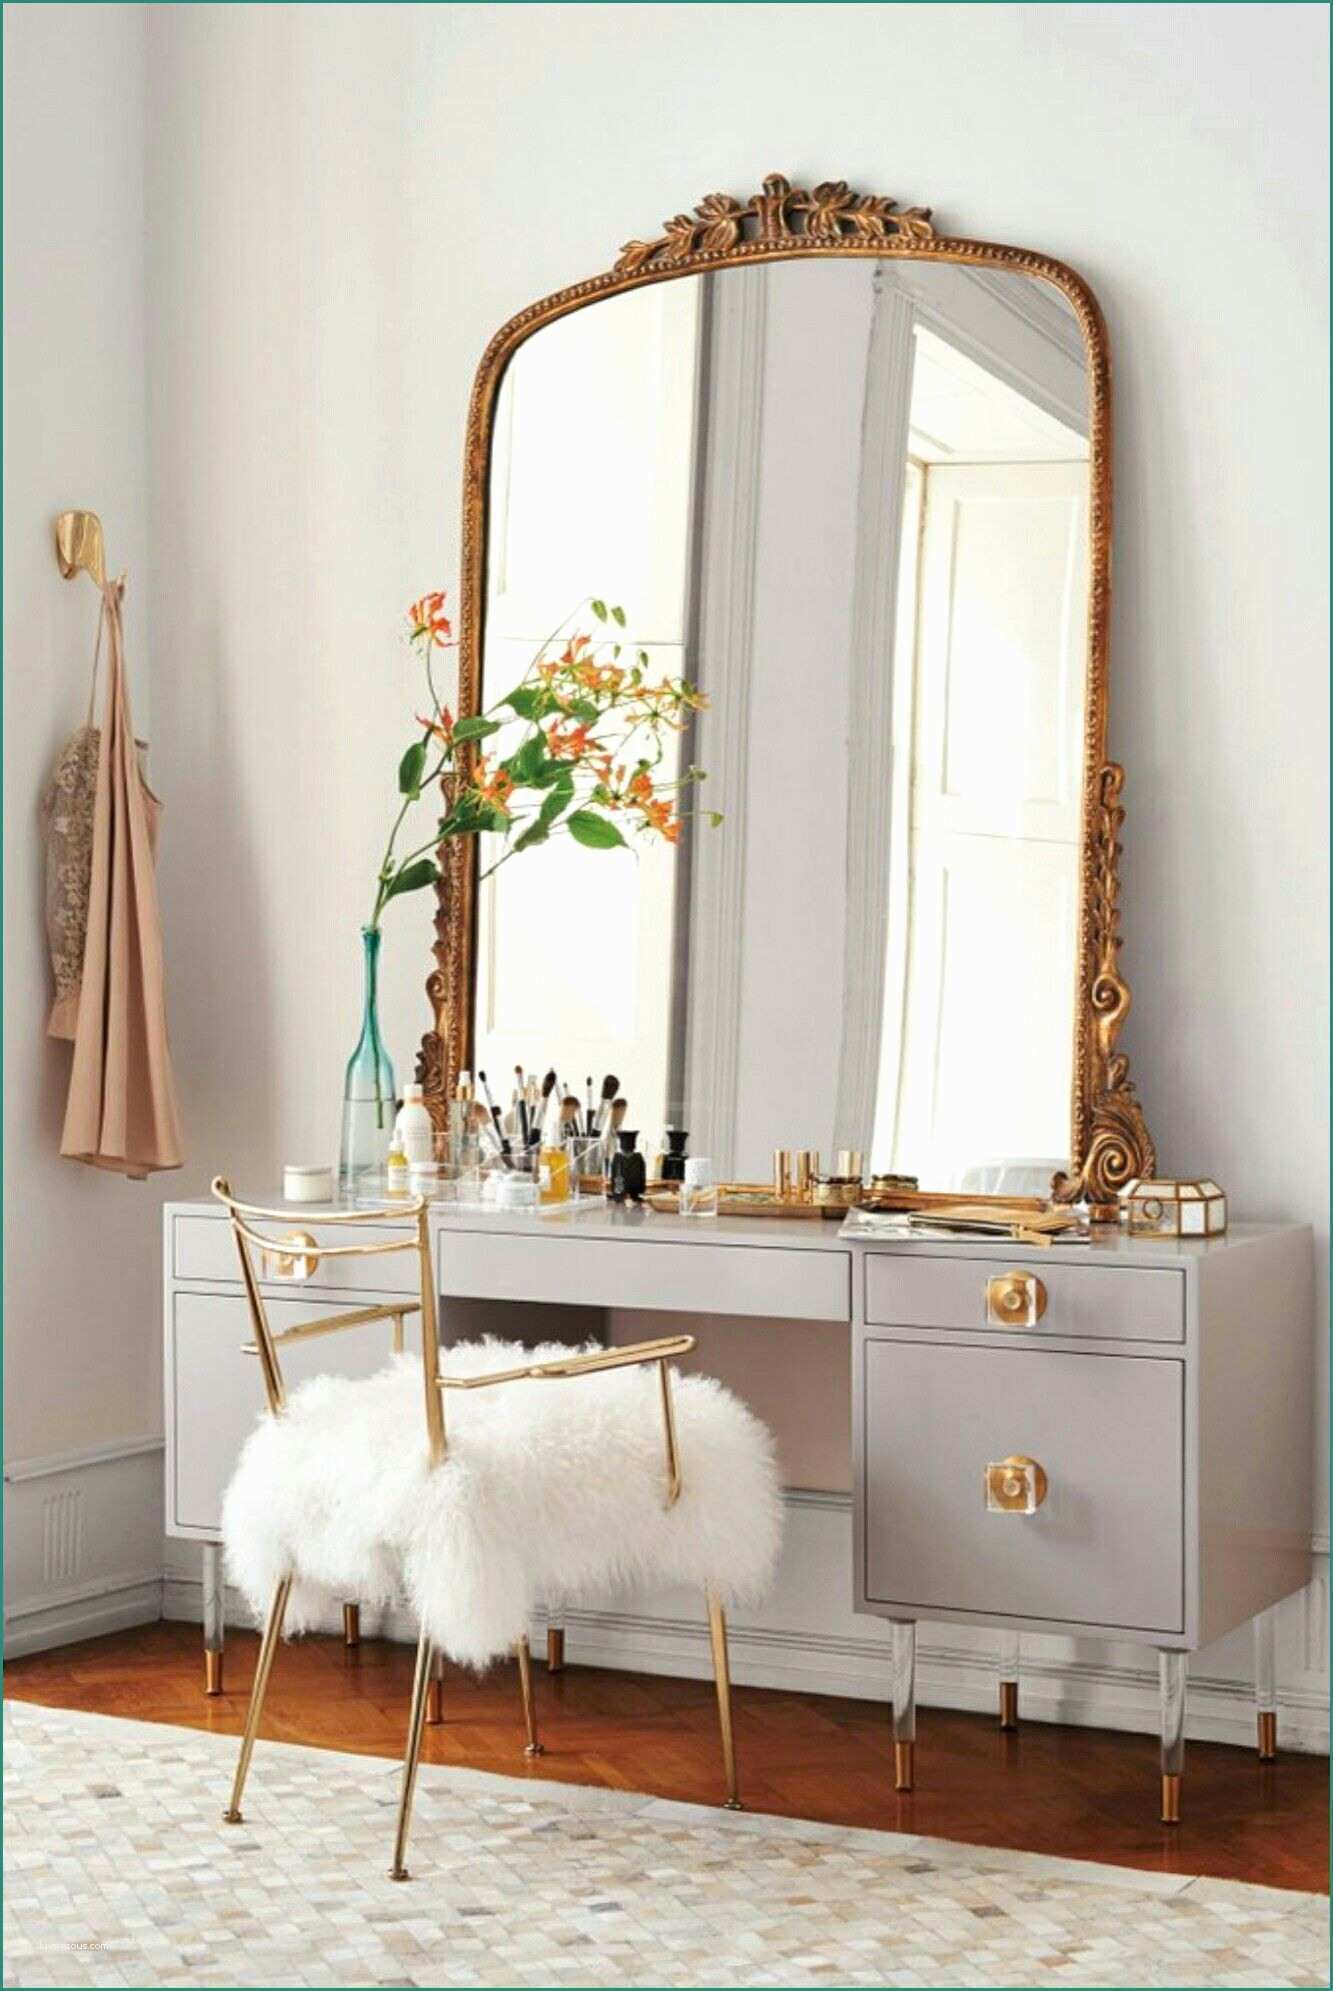 Arredamenti Case Moderne E Vanity French Large Mirror Furry Chair